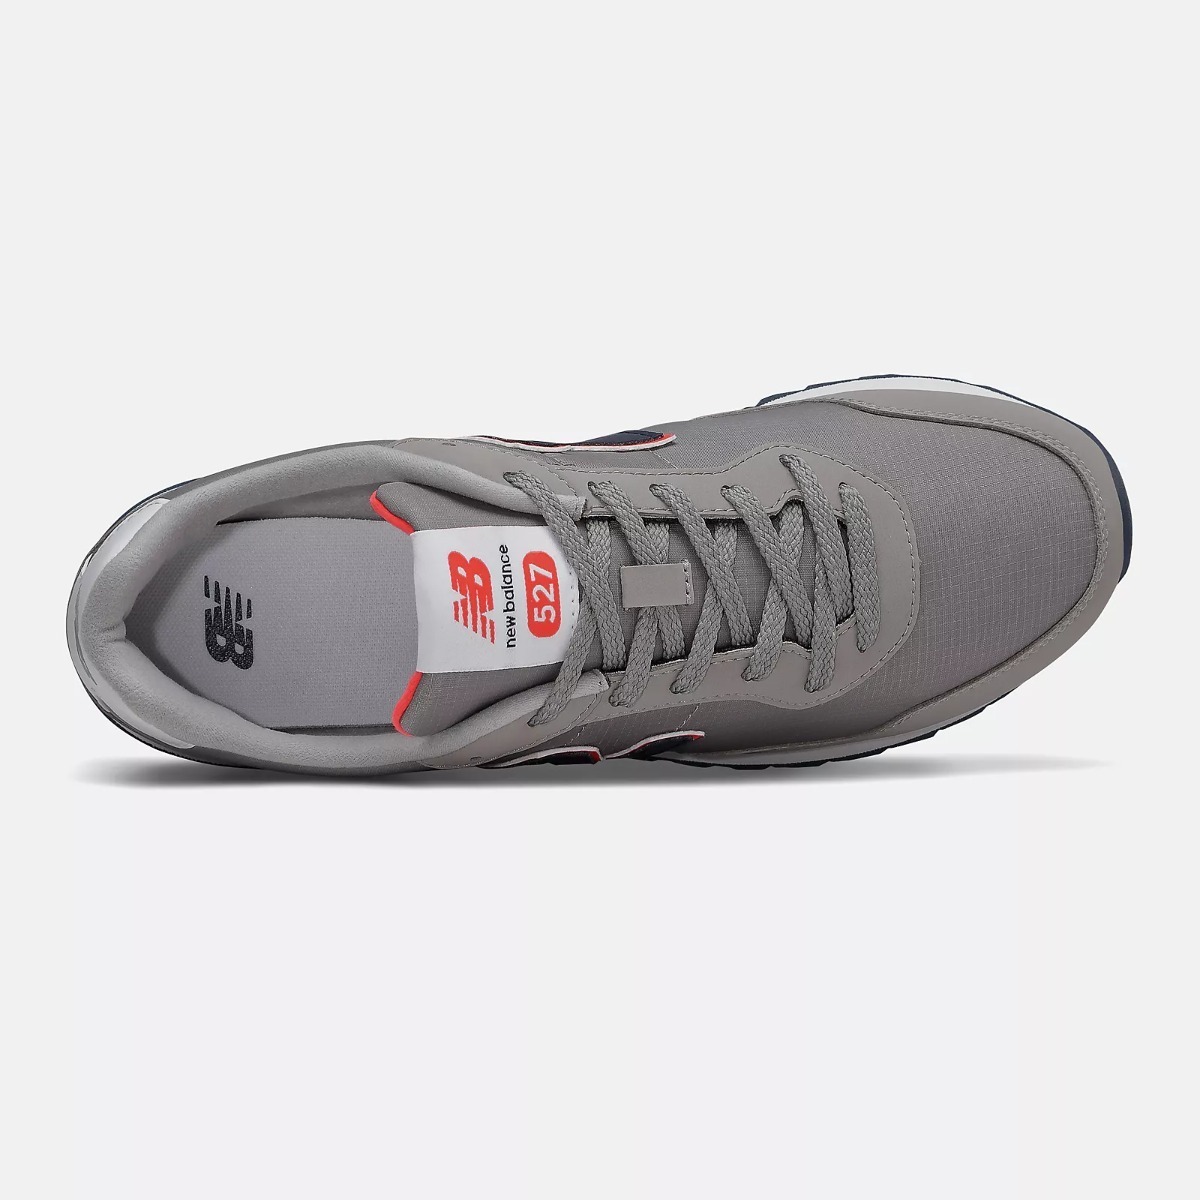 Tenis Hombre New Balance 527 Clasicos Sneakers Comodos Gris | Envío gratis